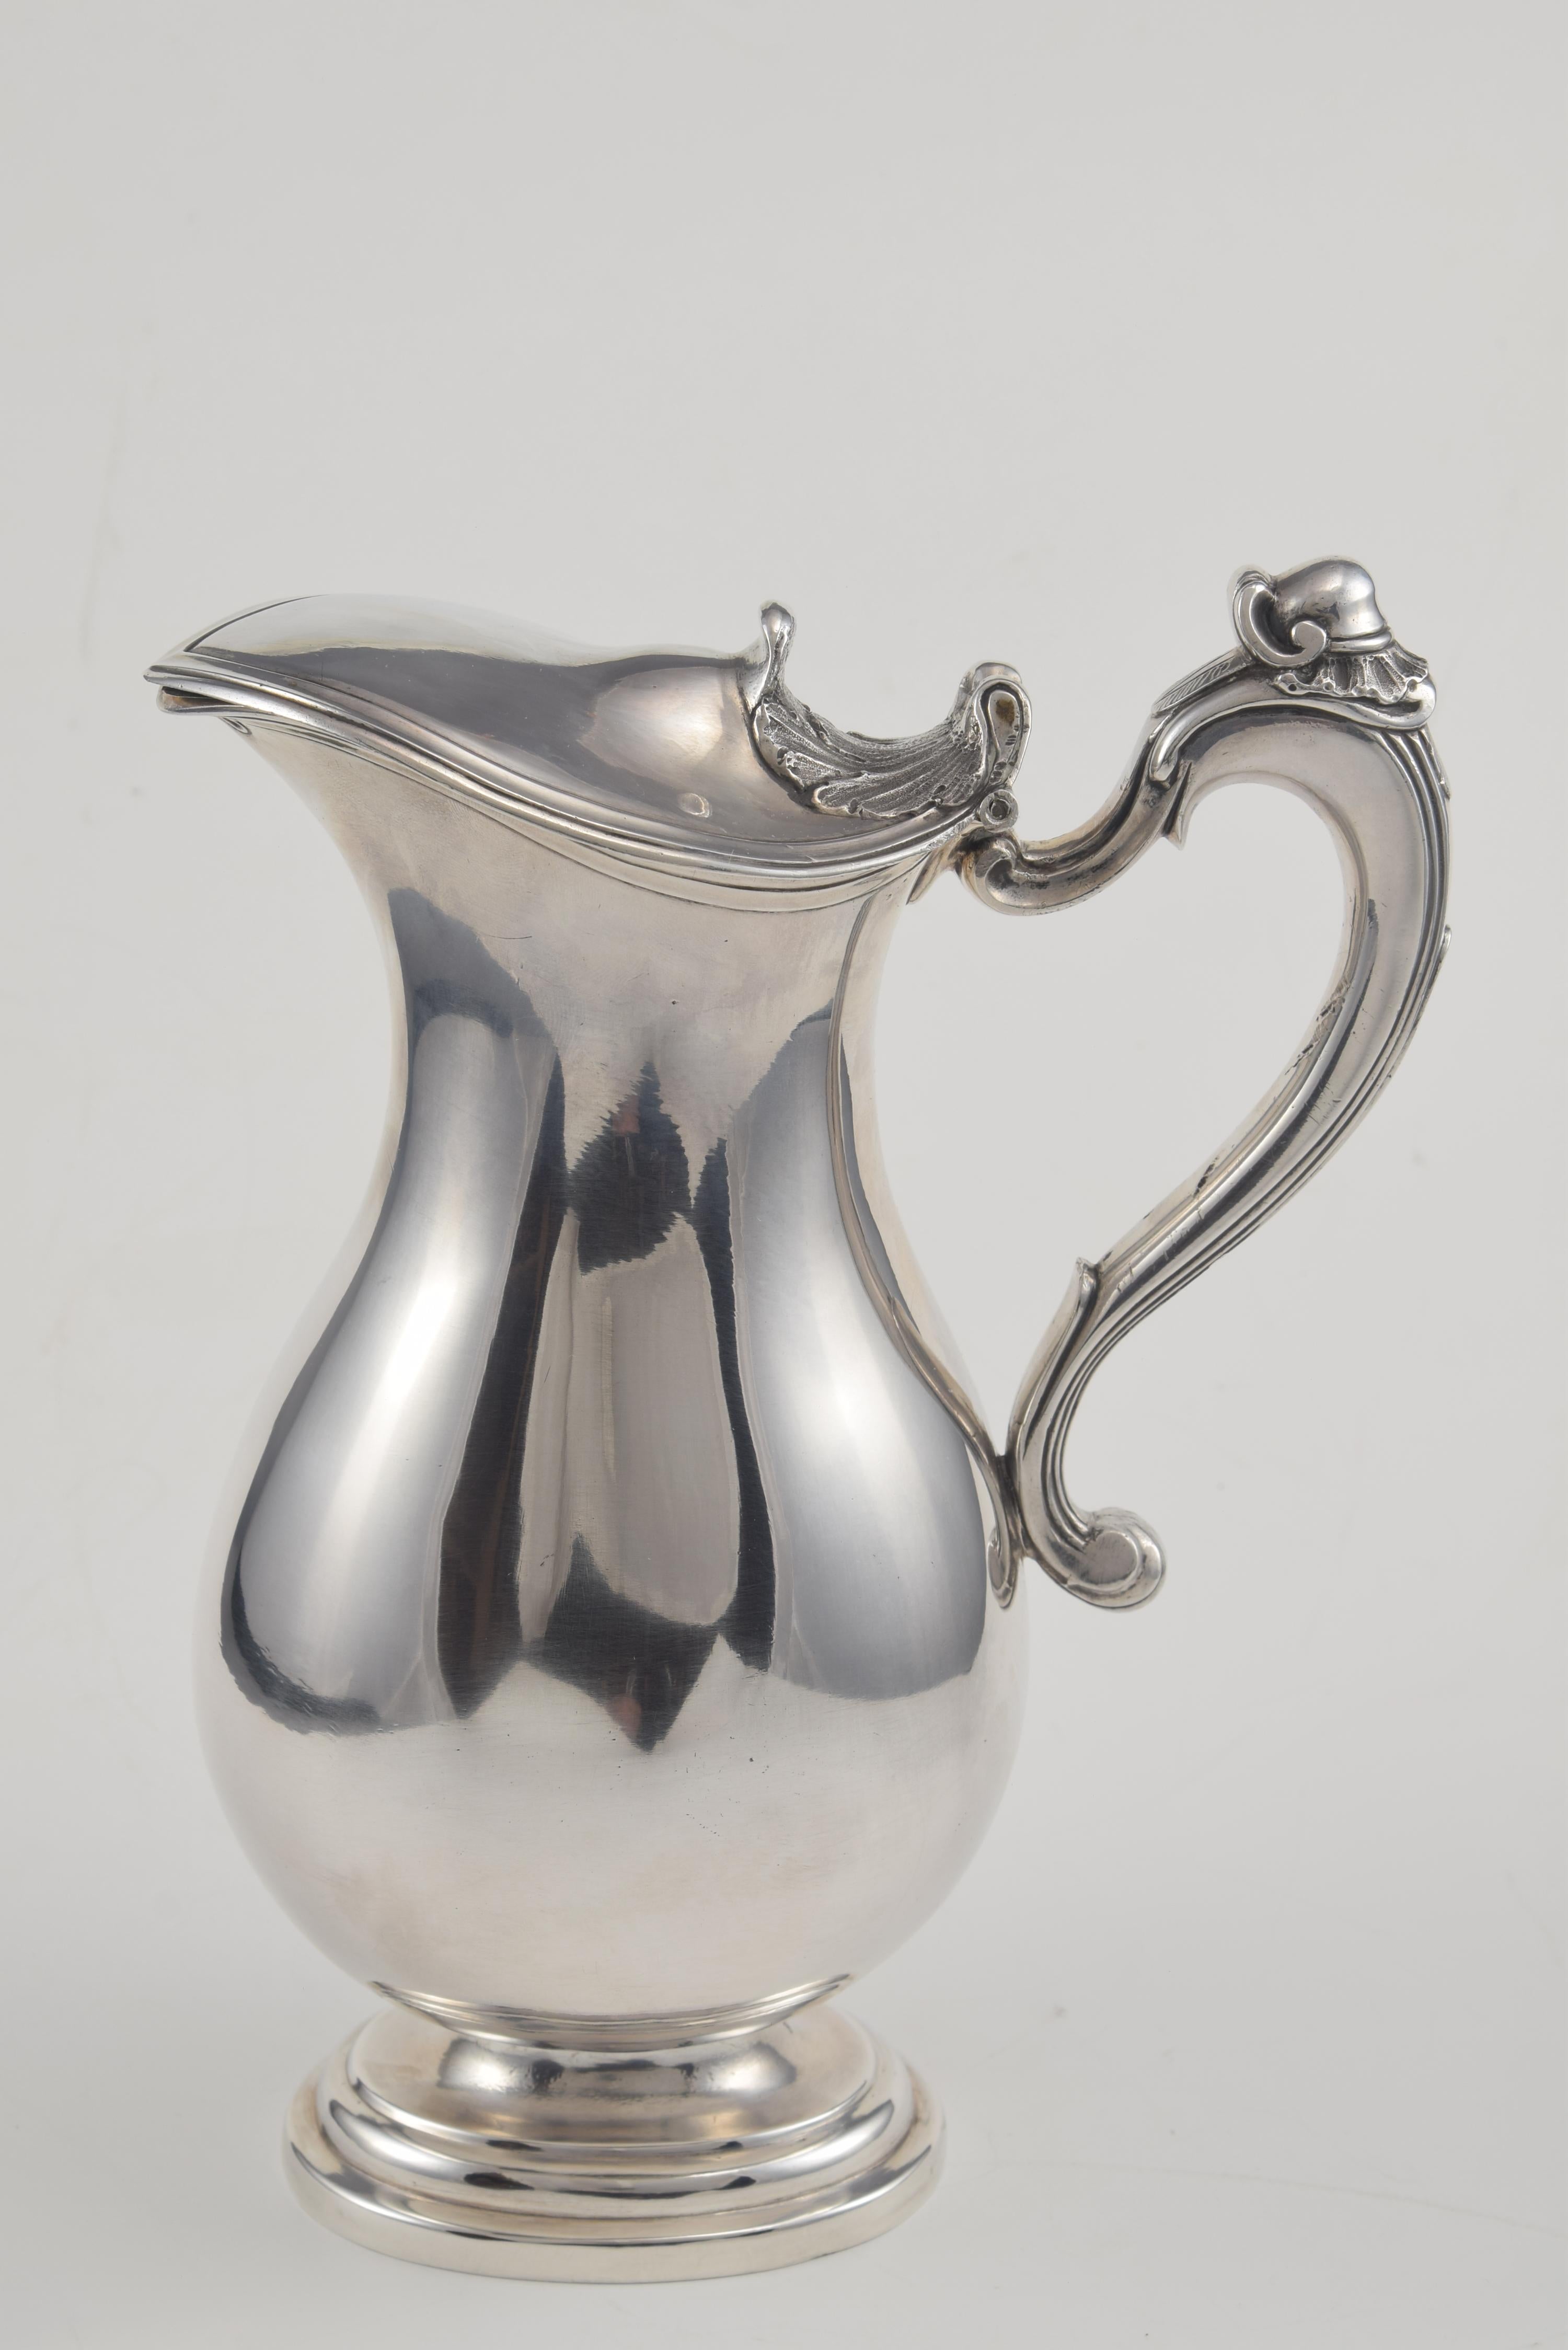 Spanish Silver Pitcher or Jar, Madrid, Spain, 1790, with Hallmarks